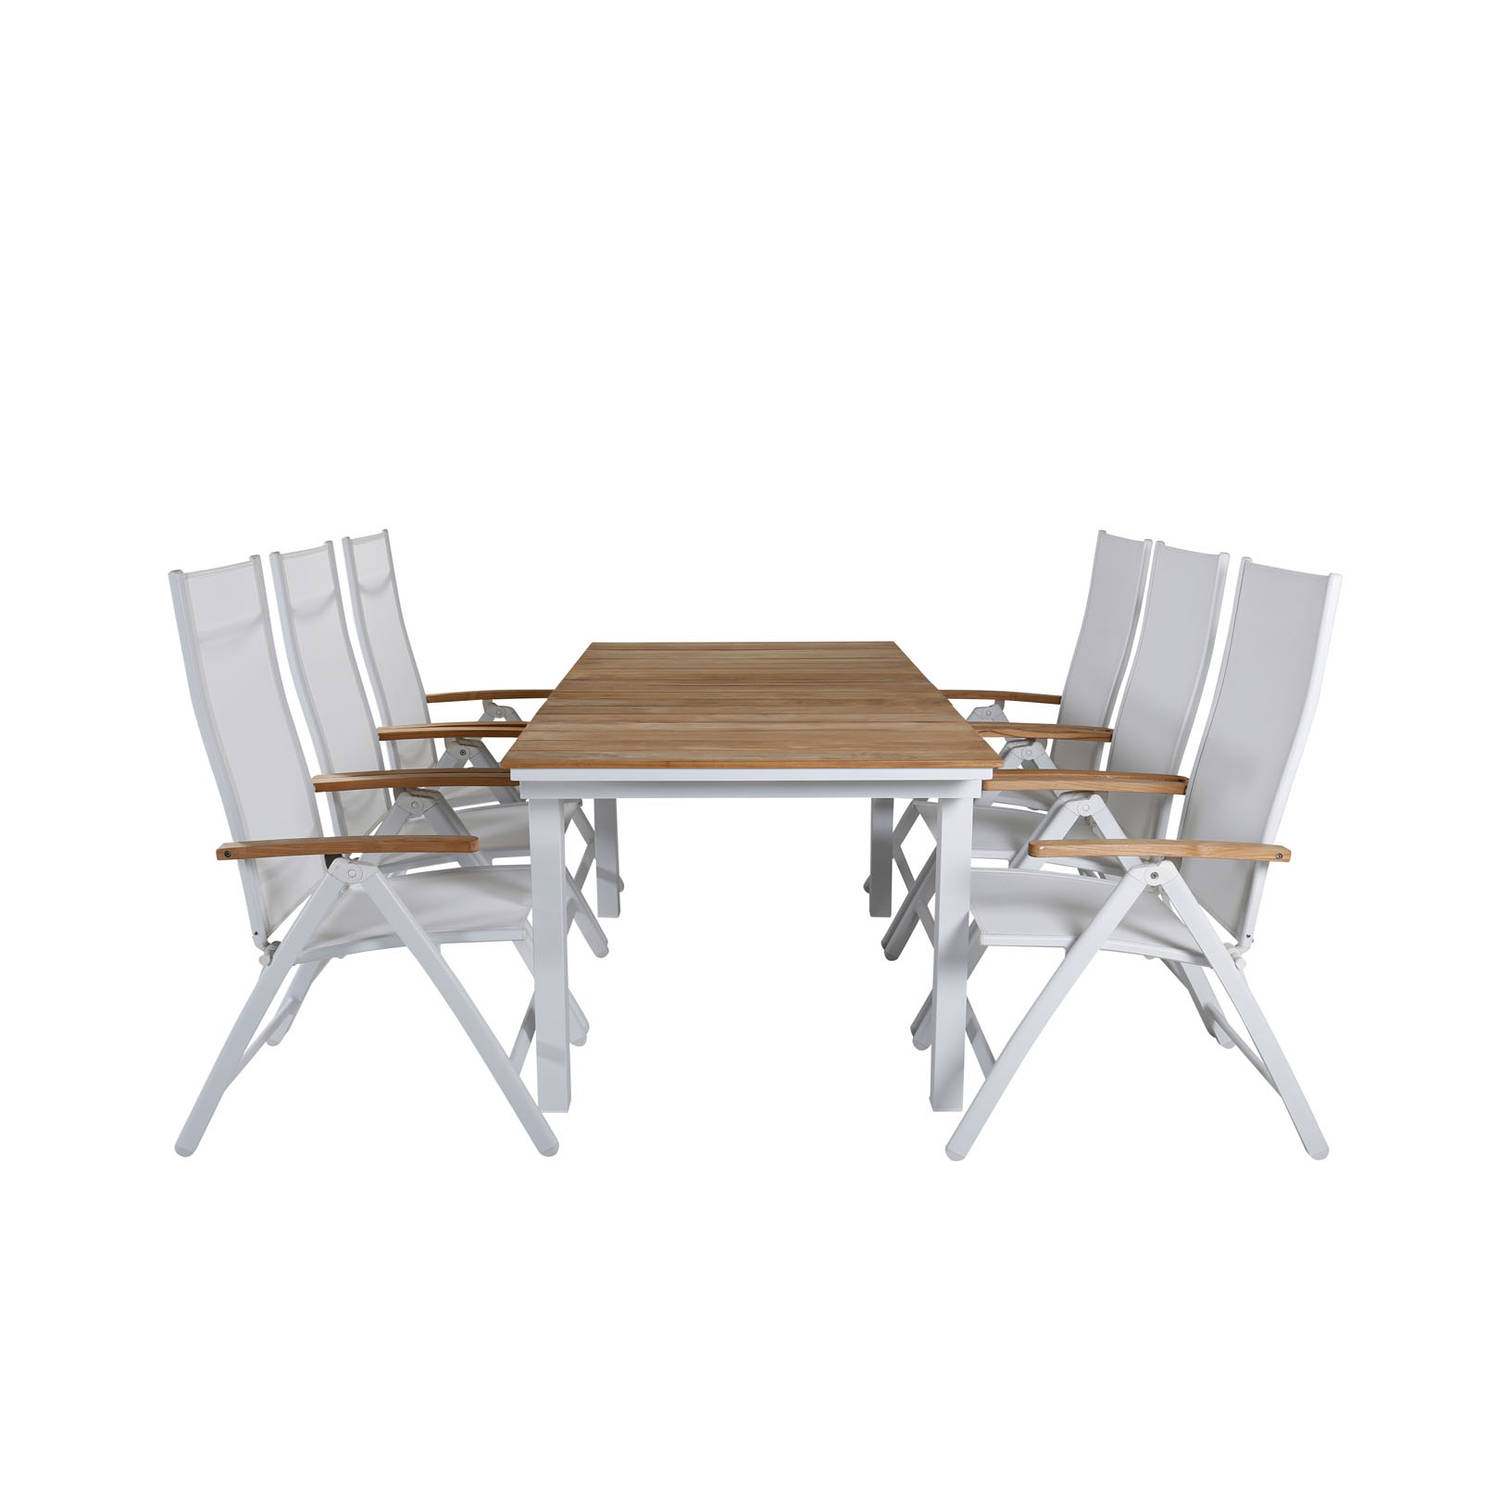 Mexico tuinmeubelset tafel 90x180/240cm en 6 stoel Panama wit, naturel.